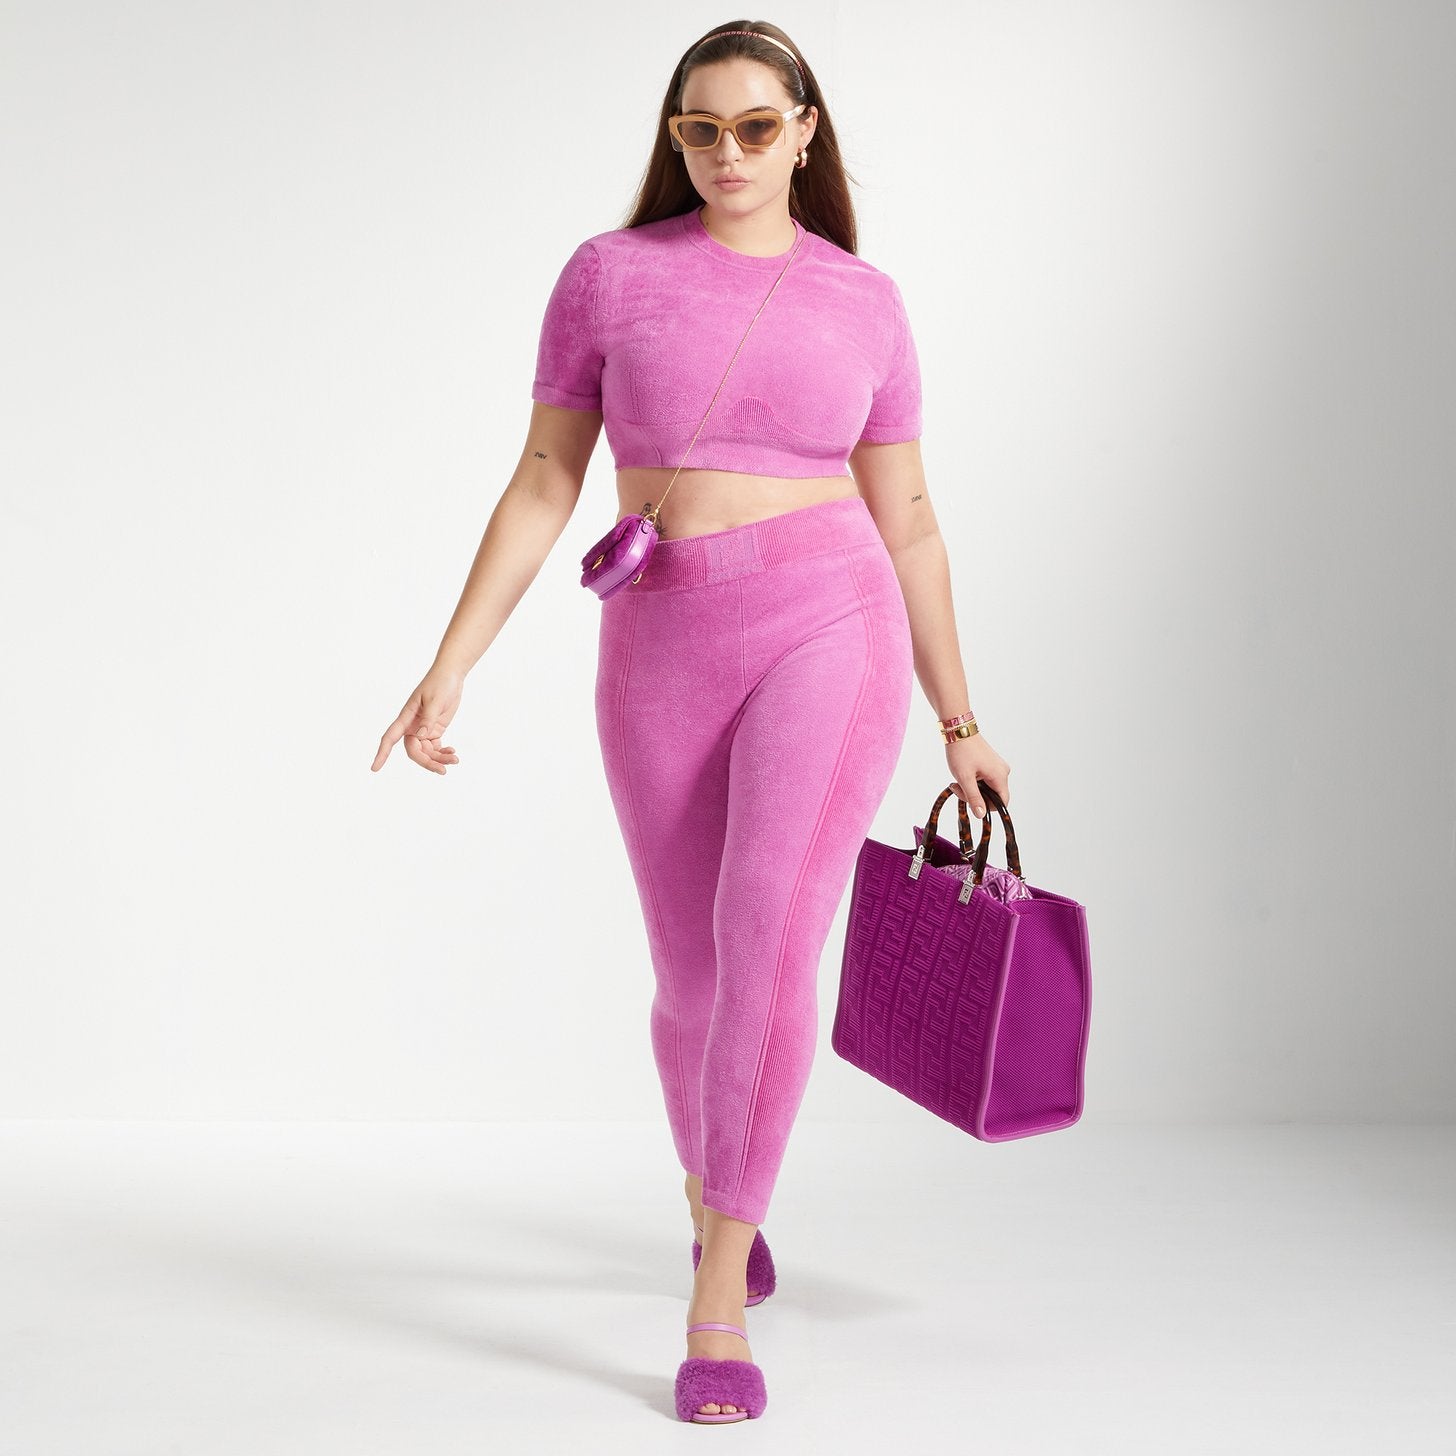 FENDI X SKIMS, Intimates & Sleepwear, Fendi X Skims Colorado Pink Tights  Size Medium Brand New Original Package